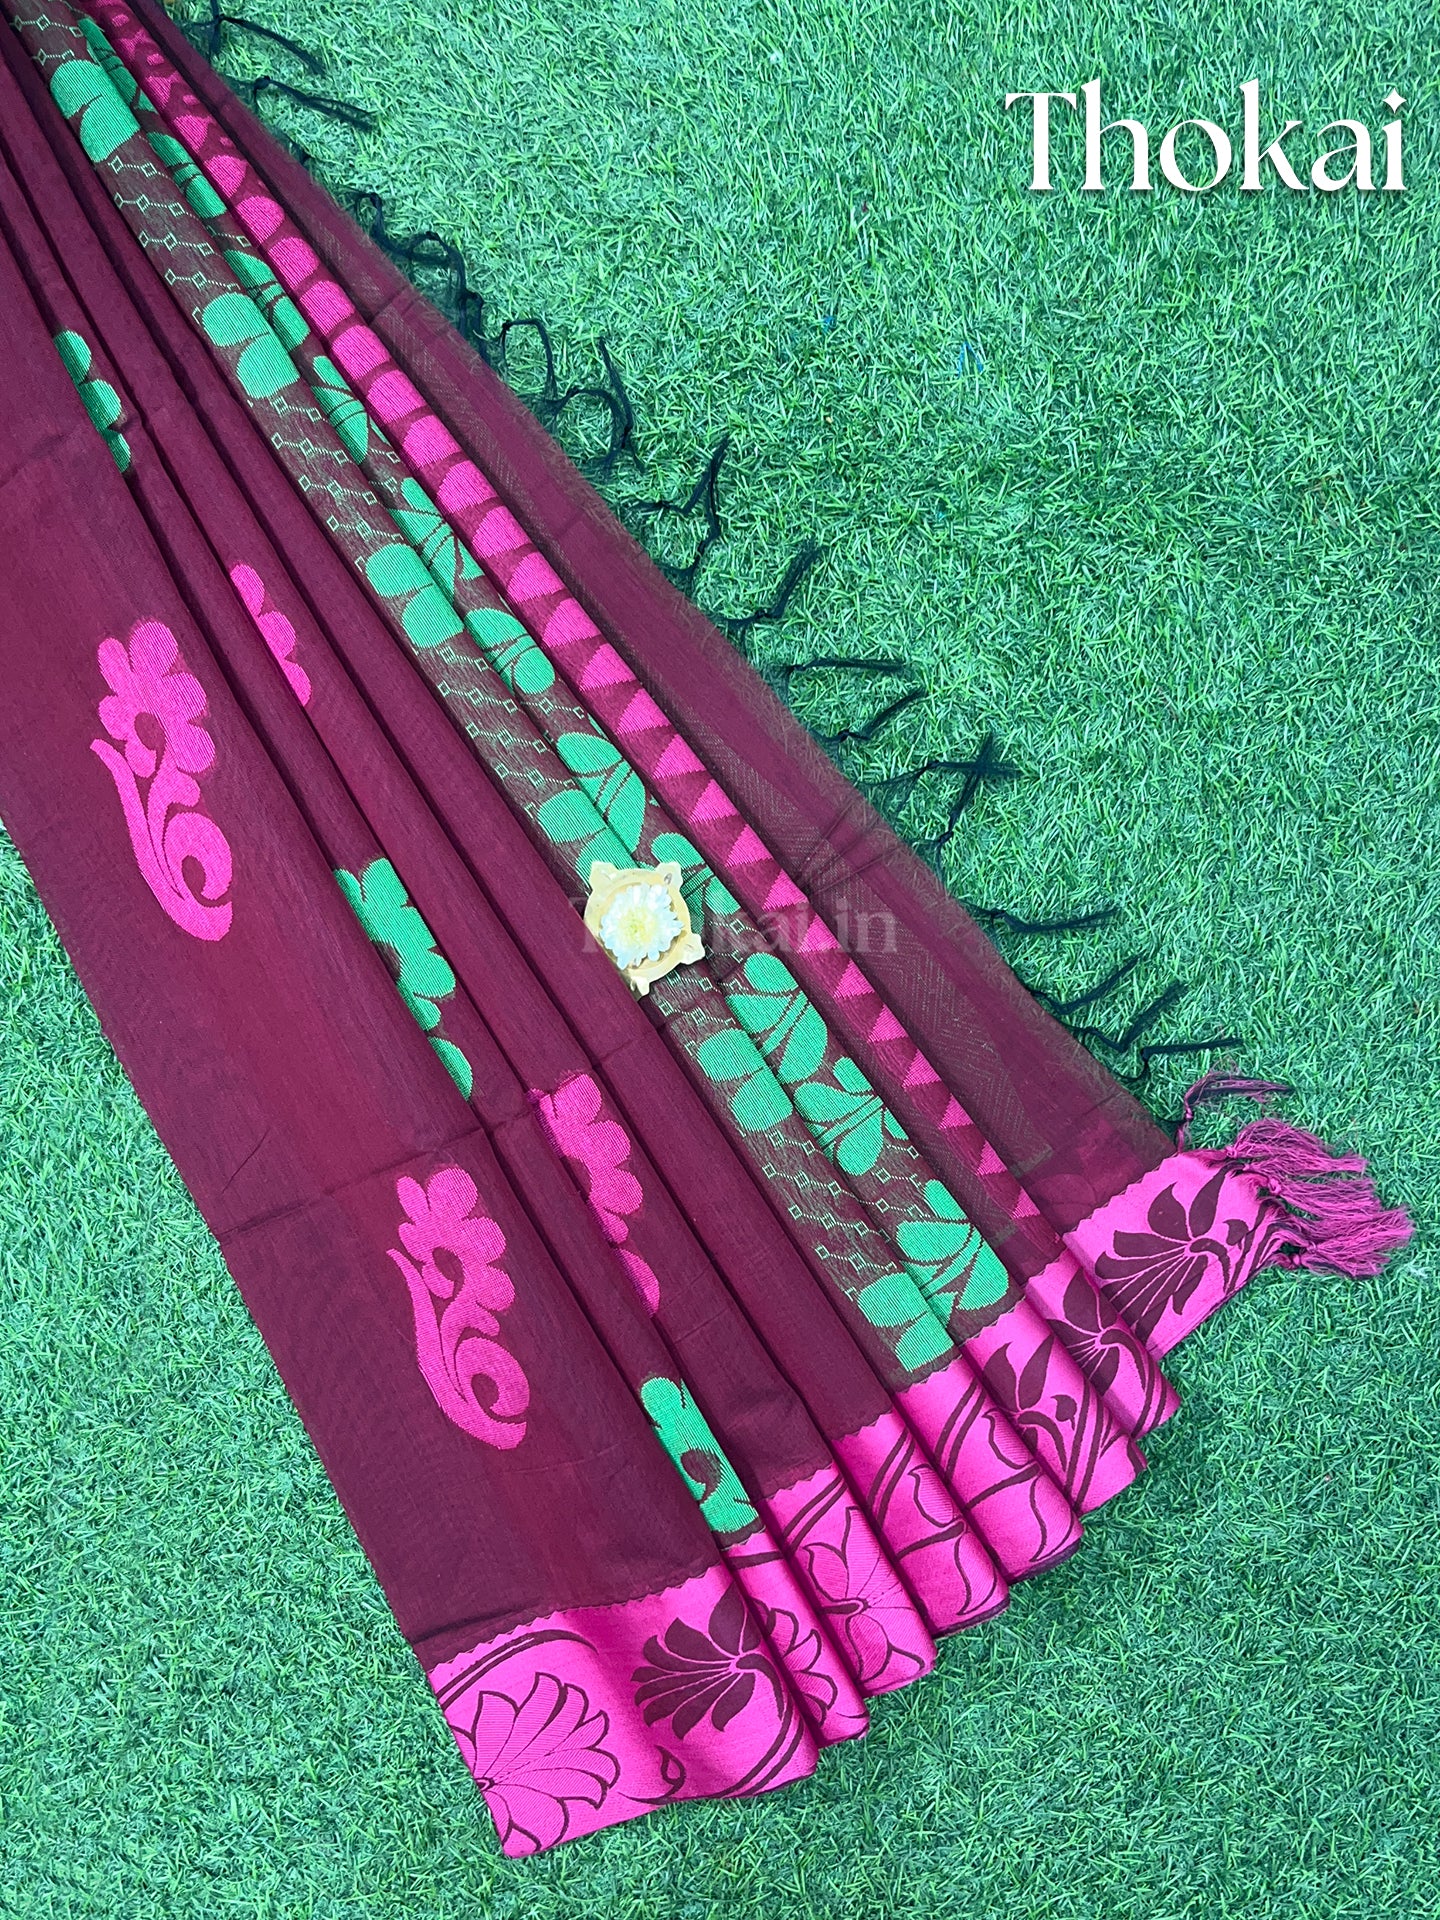 Maroon chanderi silk cotton saree